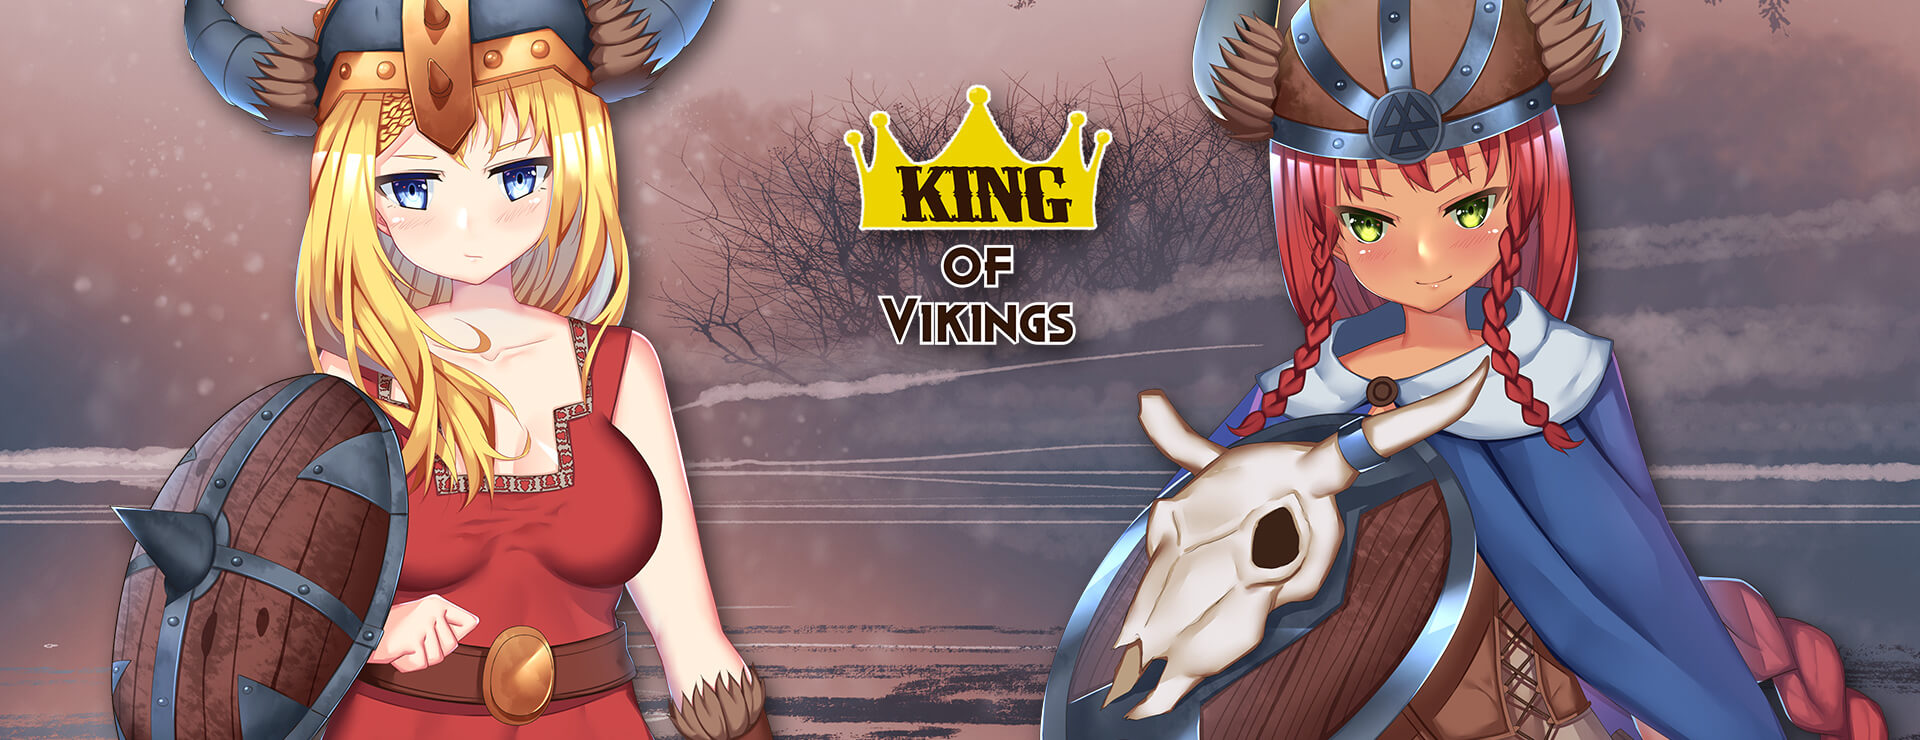 King of Vikings - ビジュアルノベル ゲーム